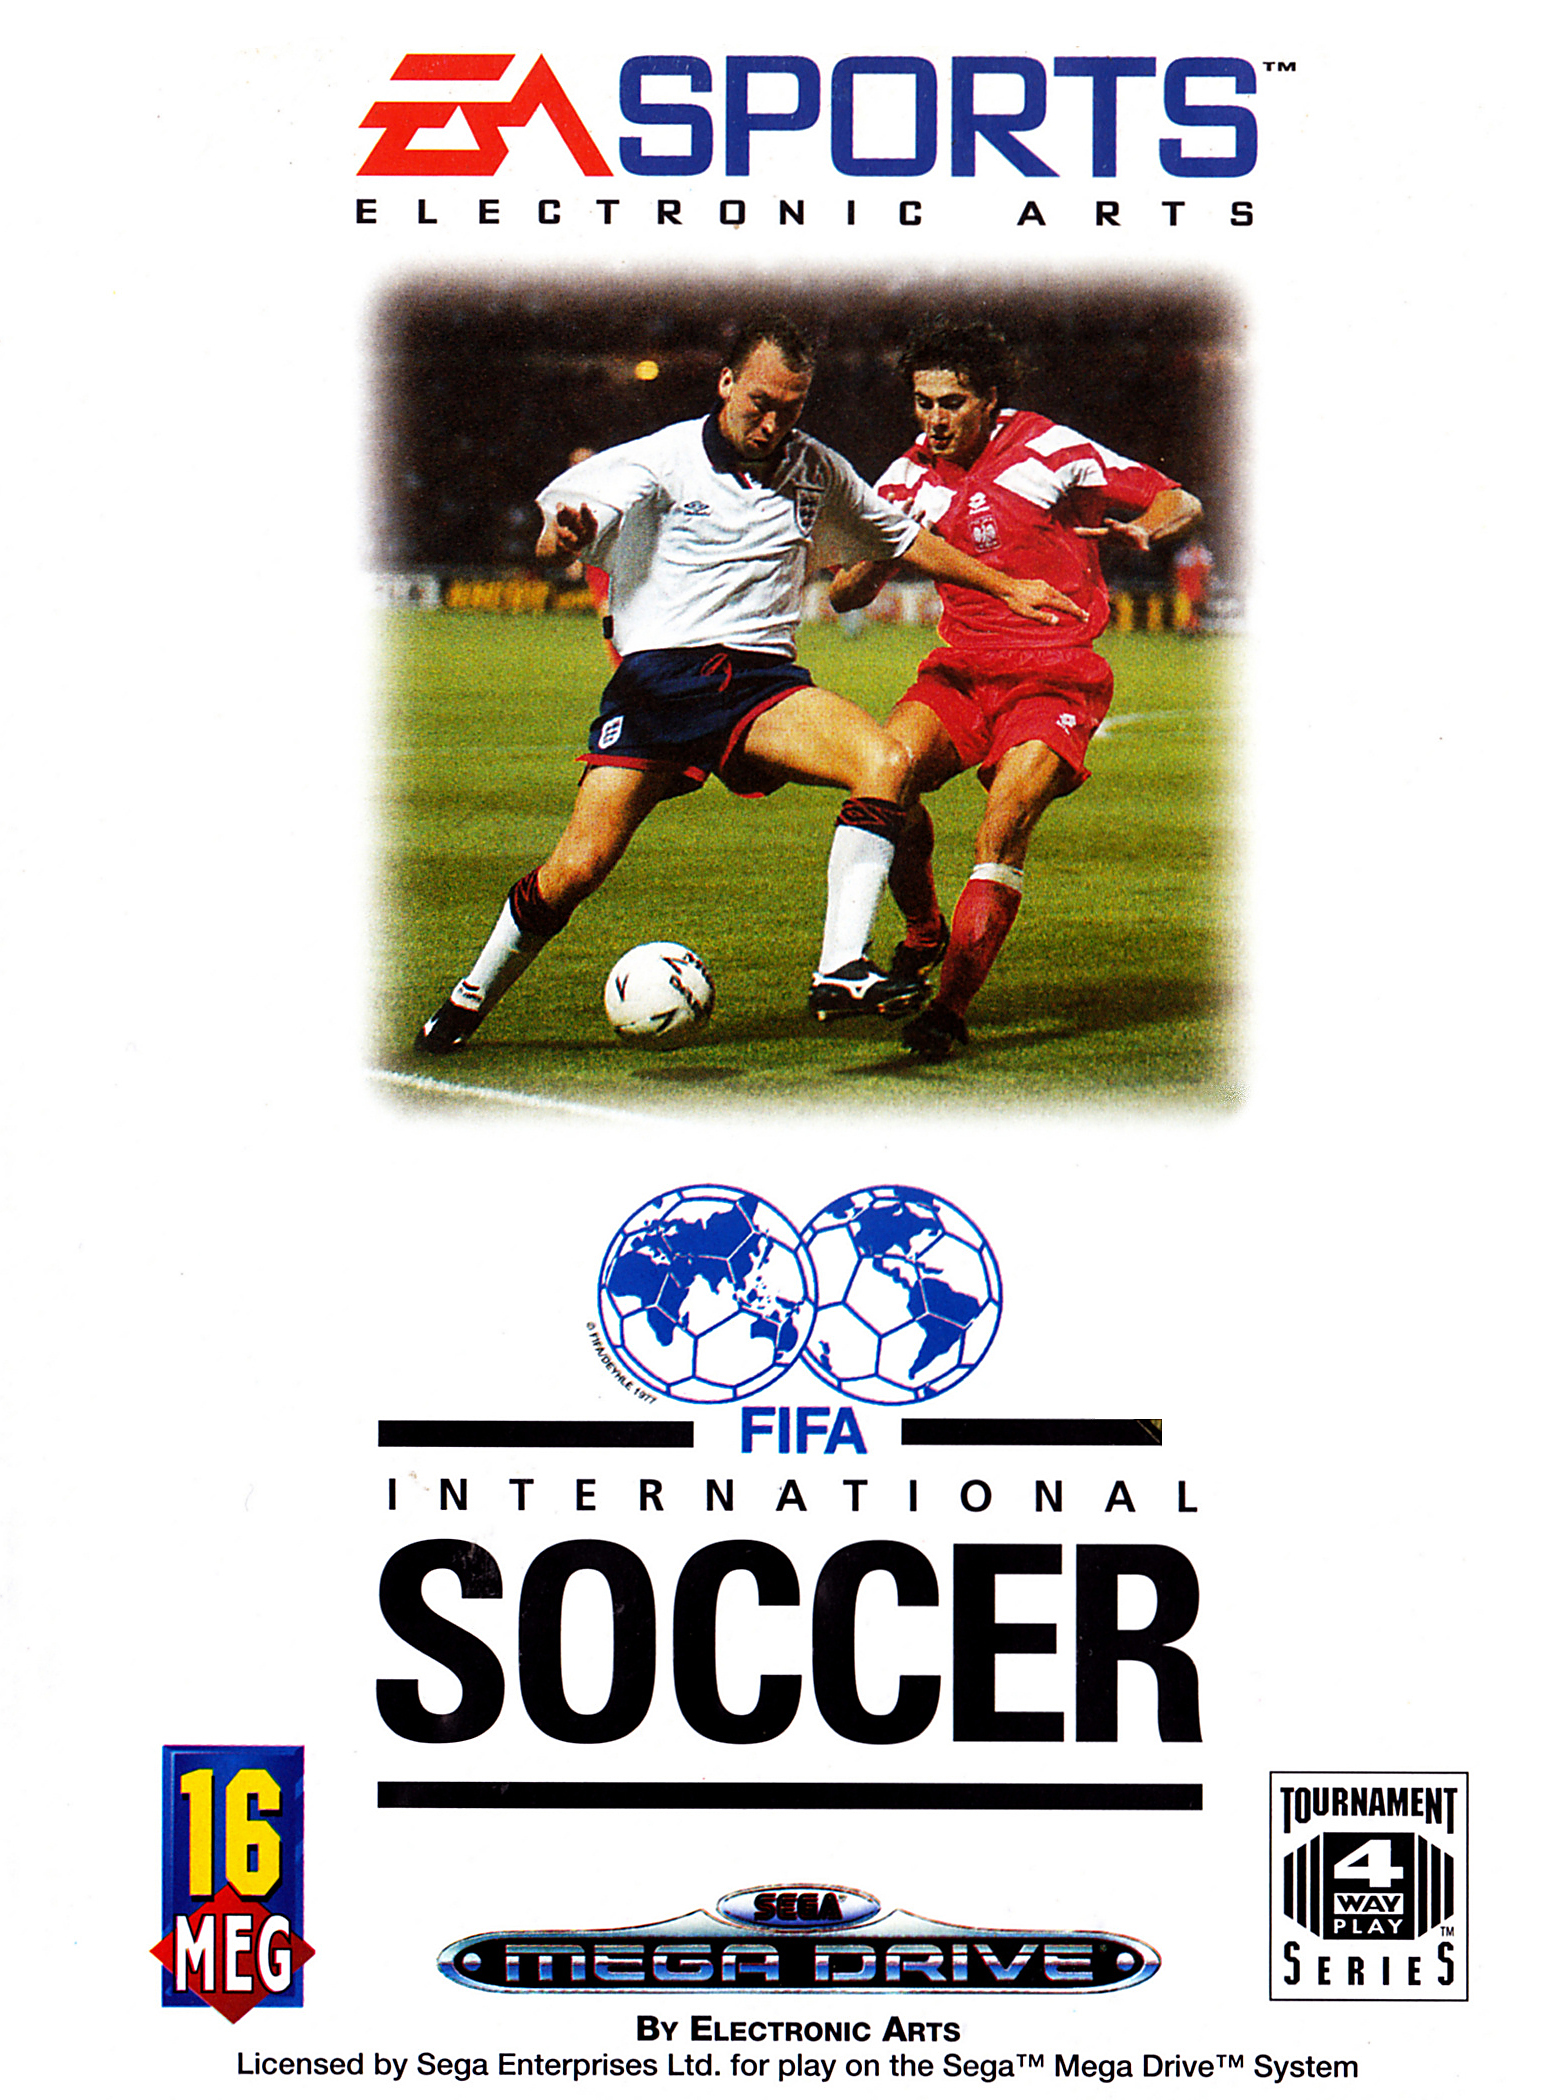 FIFA 06 - Wikipedia